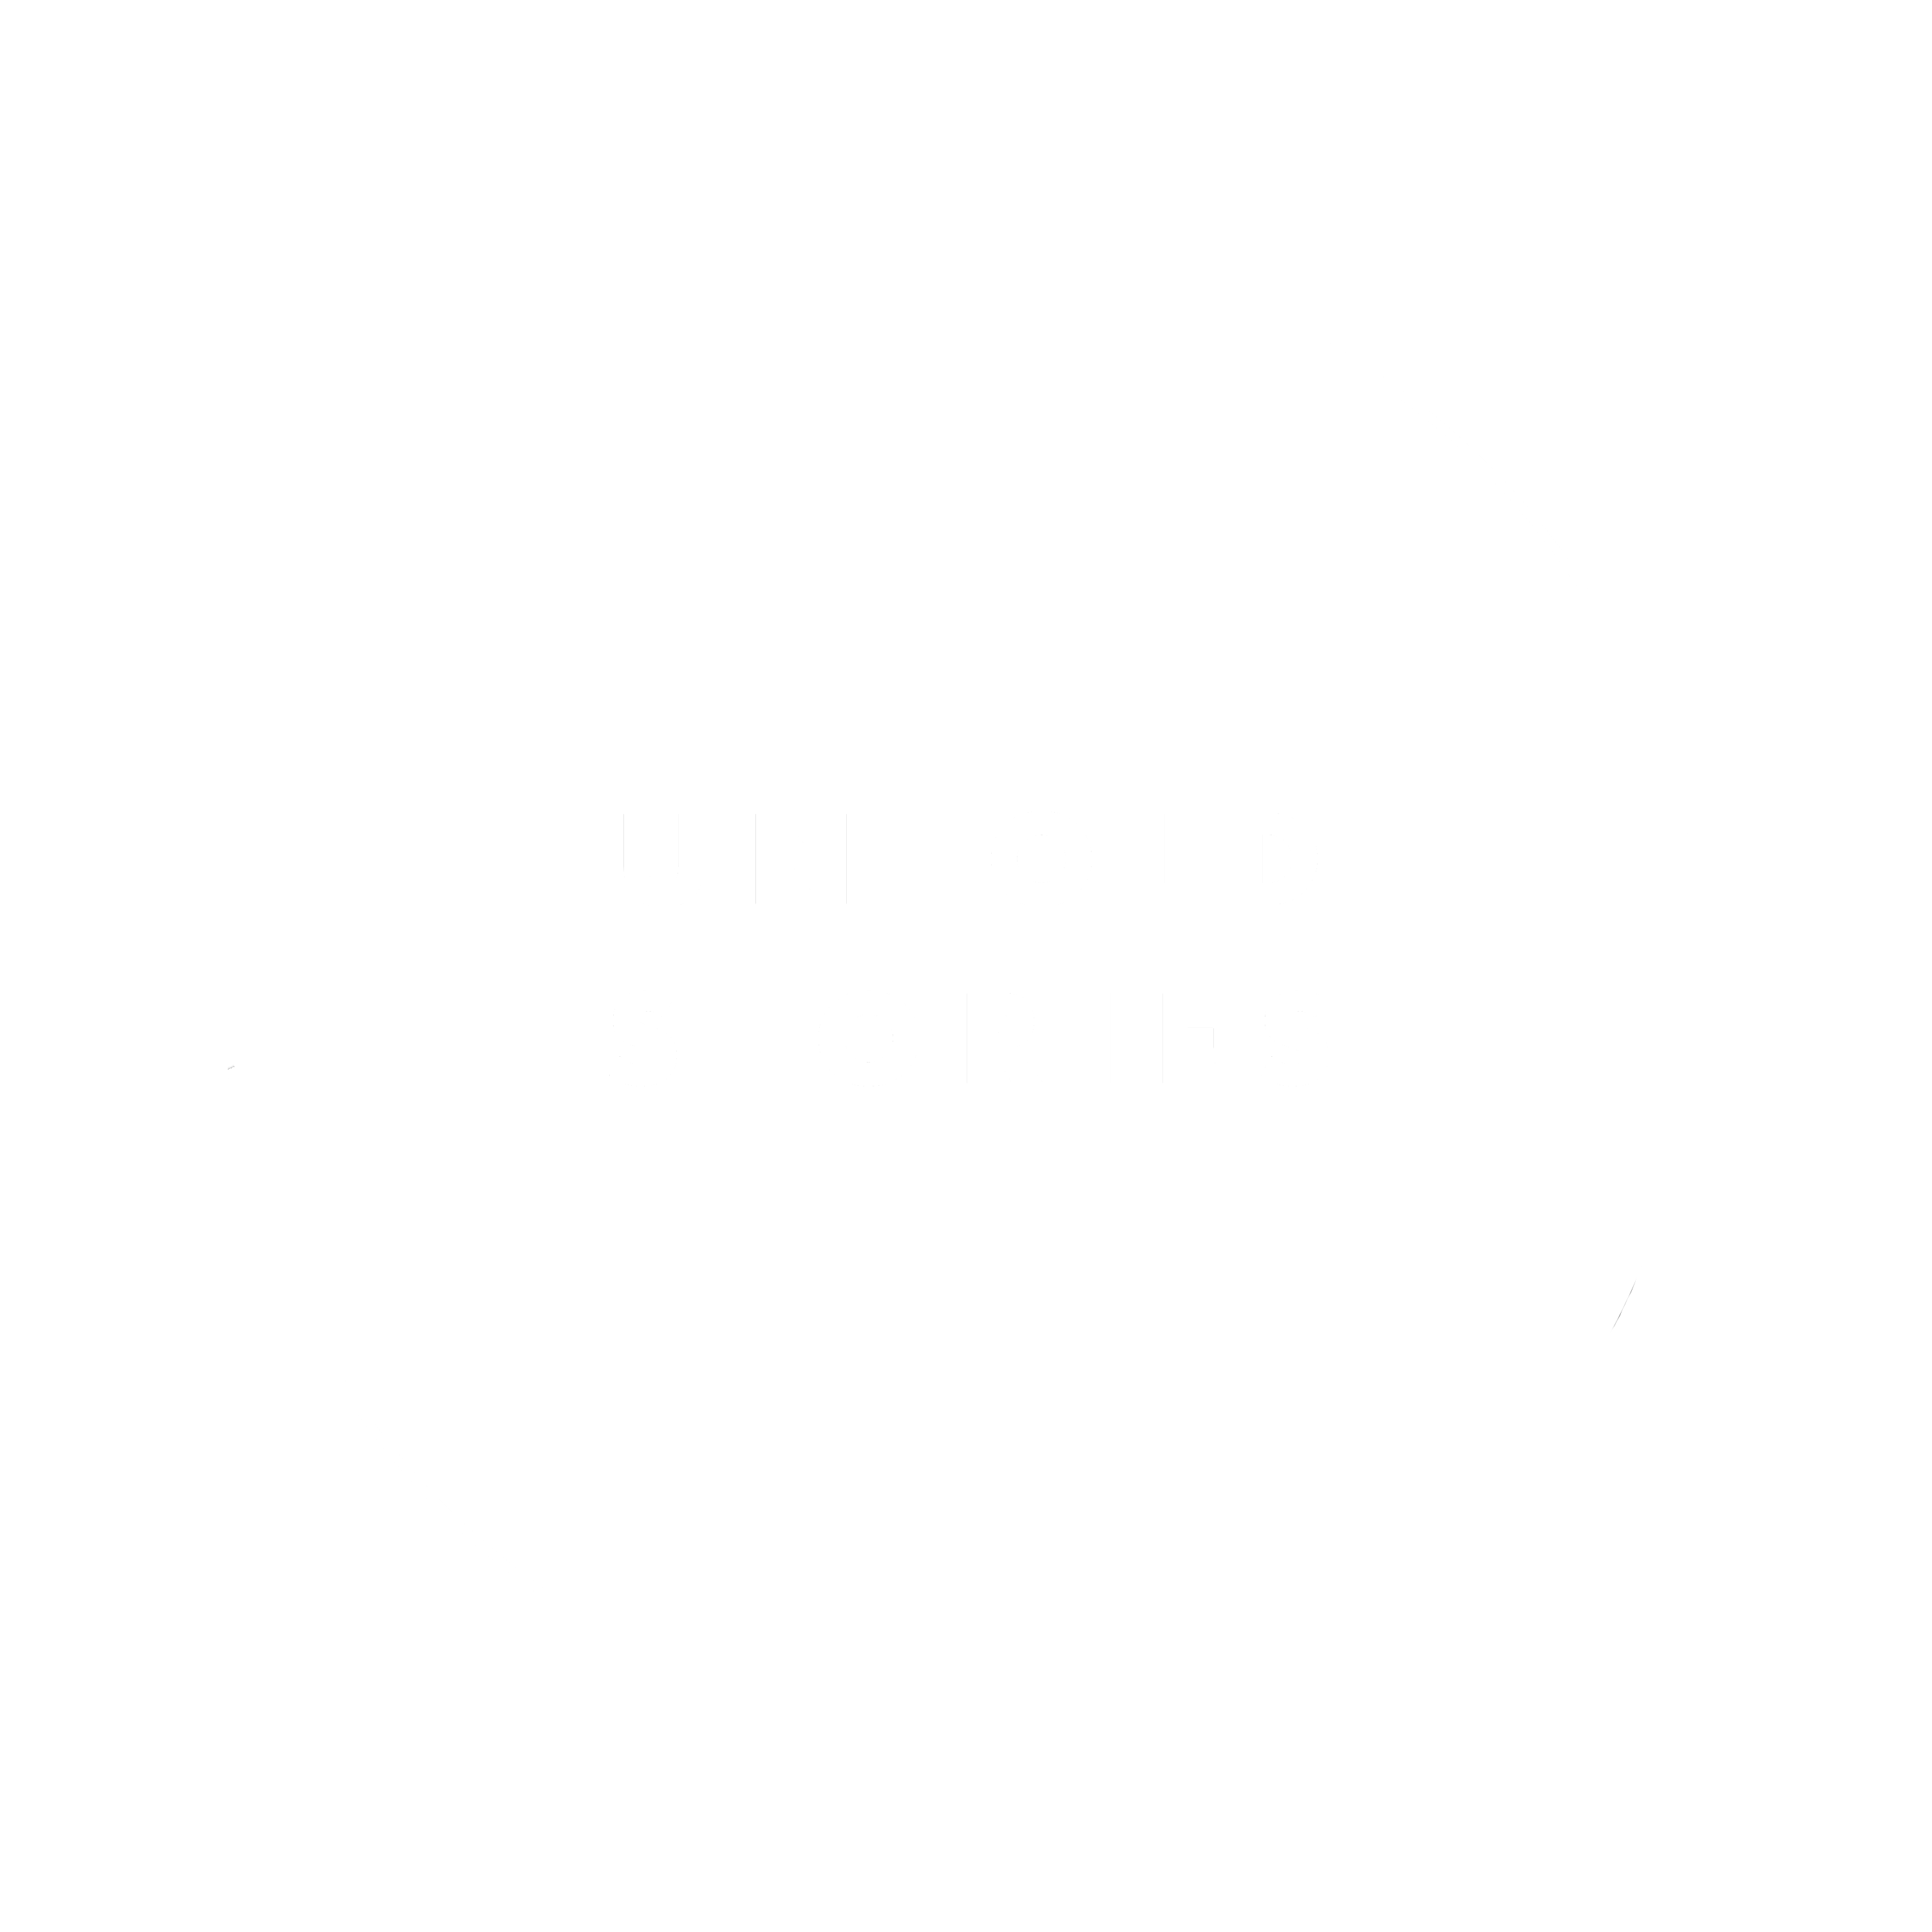 Untold Stories Agency